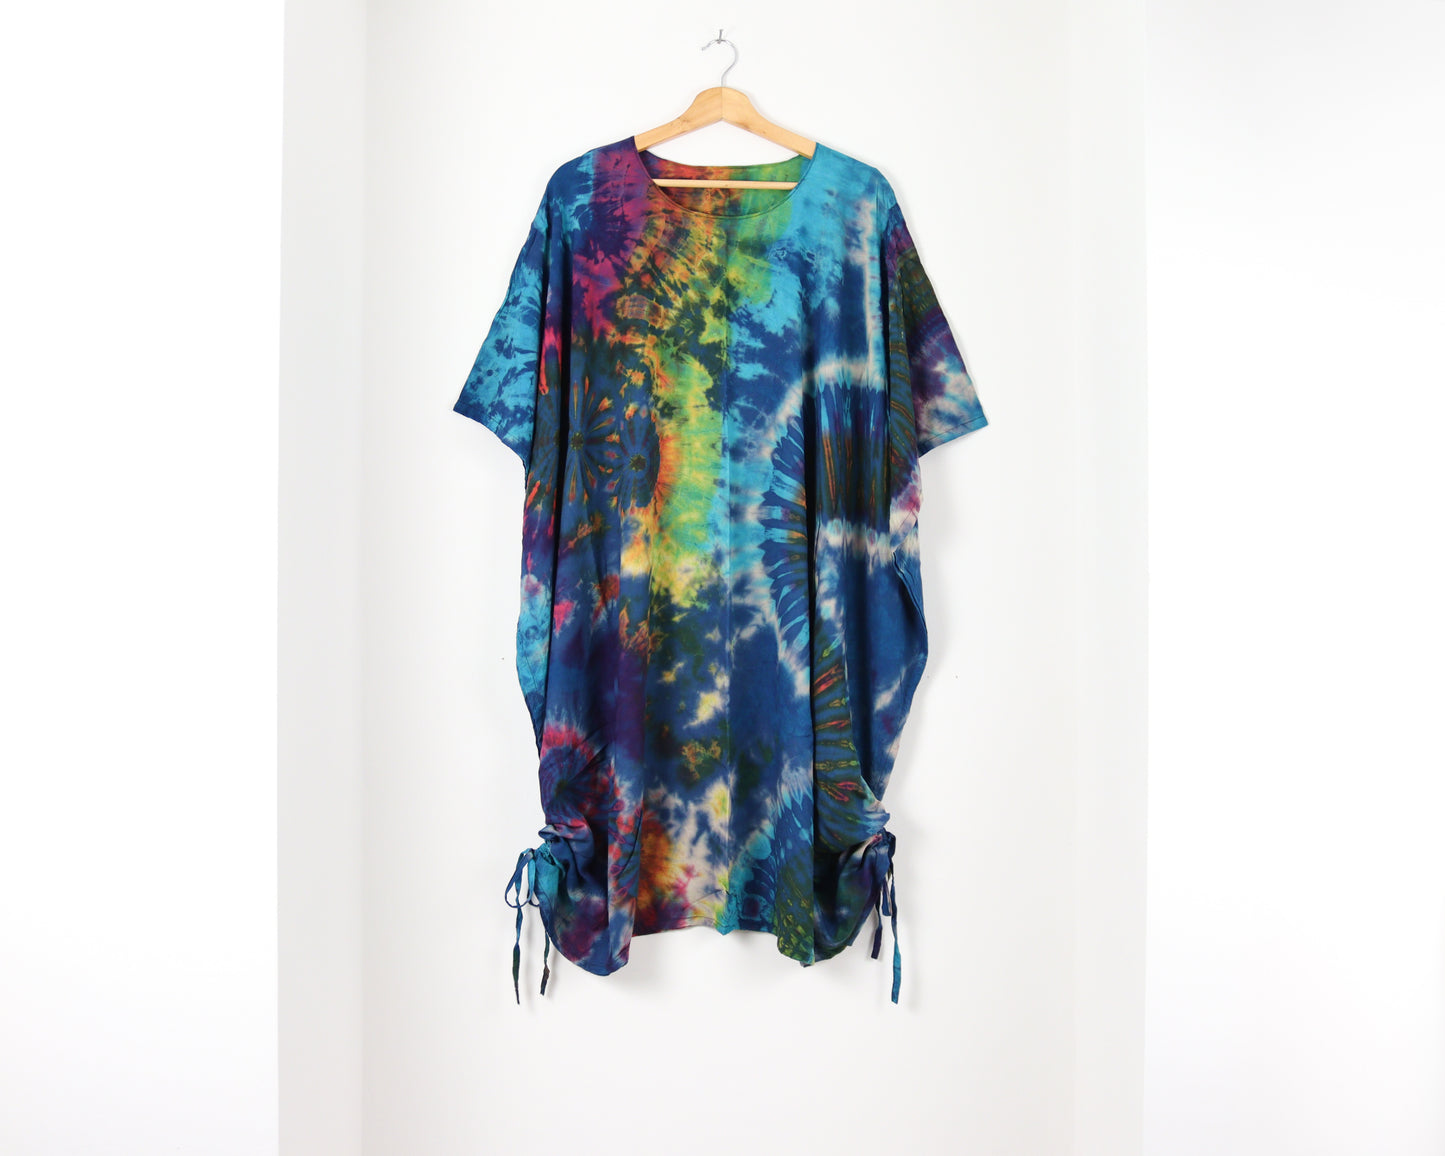 Short Summer Poncho Tie-Dye Dress / Top - Aqua Blue Rainbow